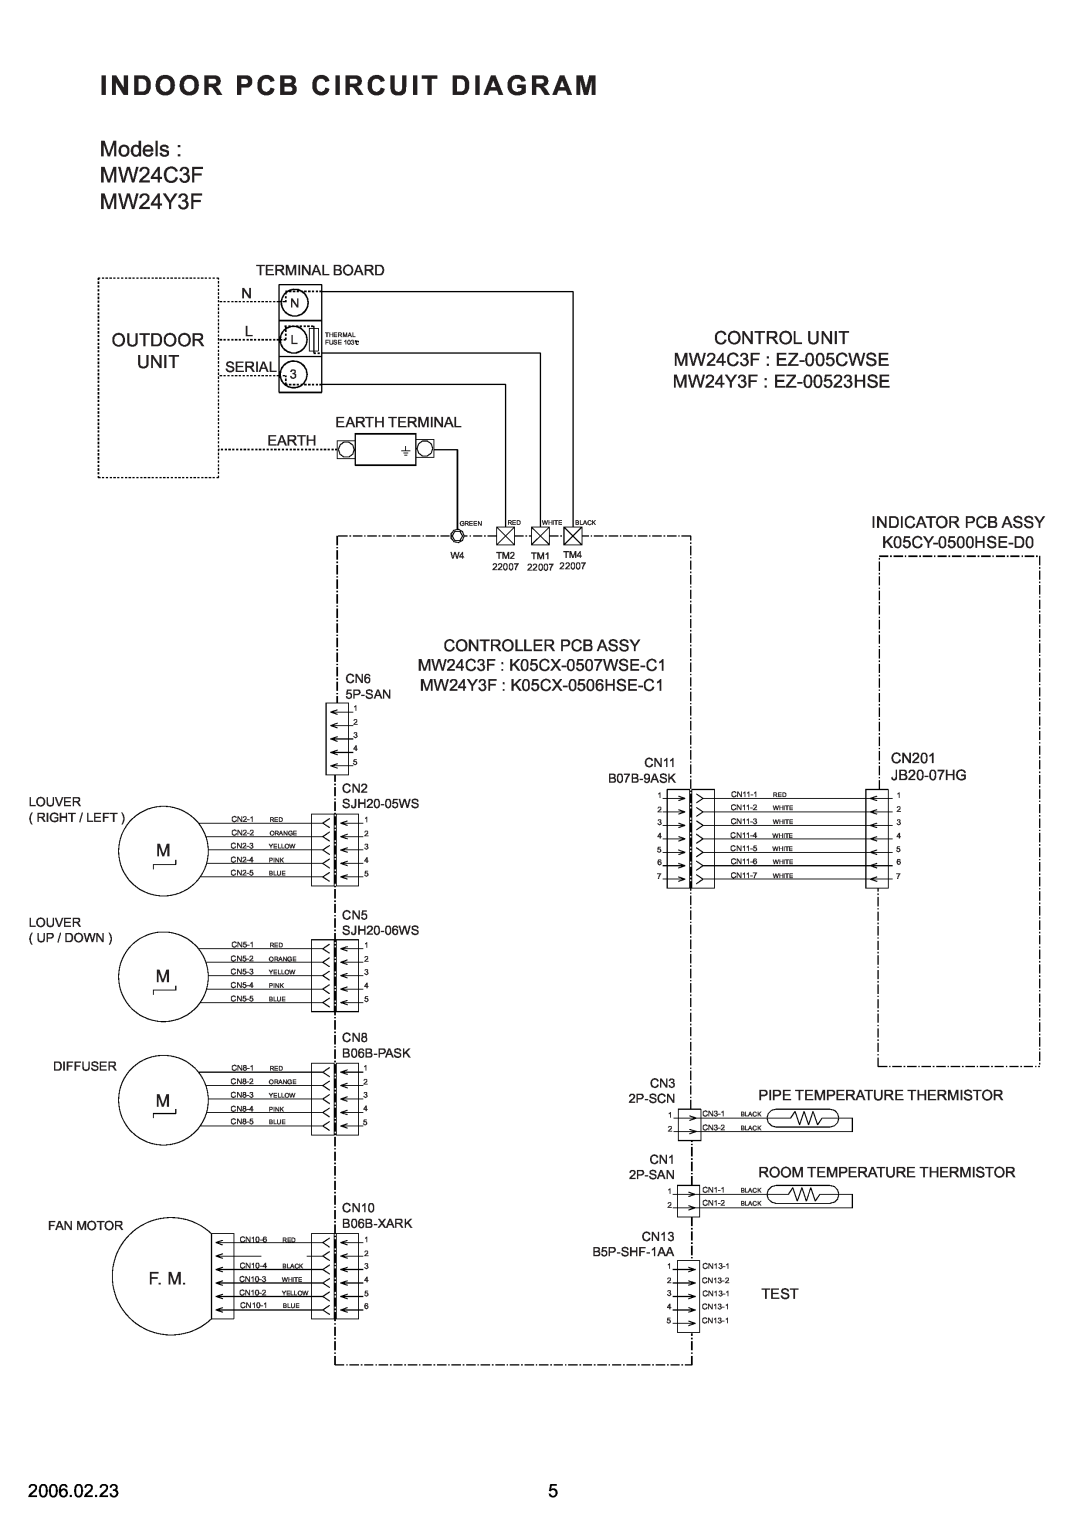 Friedrich MW24C3F Indoor Pcb Circuit Diagram, 2006.02.23, Indicator Pcb Assy, CN6 MW24Y3F : K05CX-0506HSE-C1 5P-SAN 